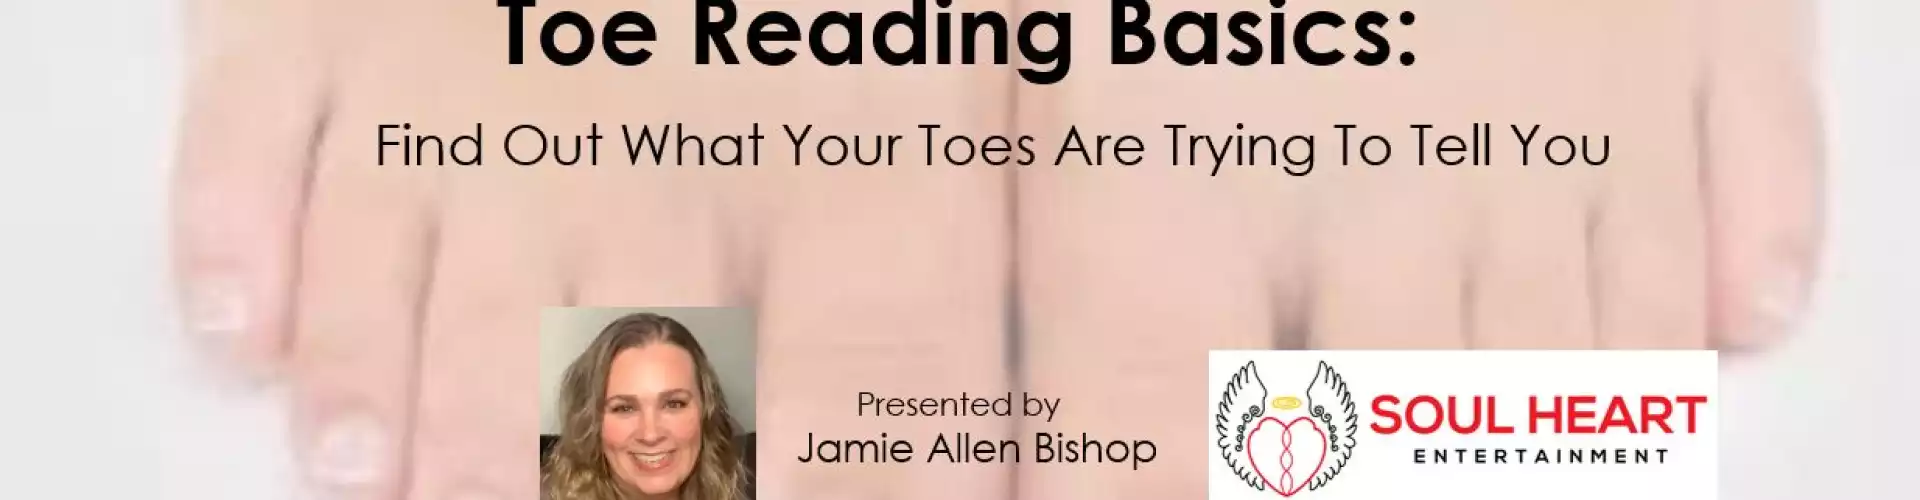 Toe Reading Basics